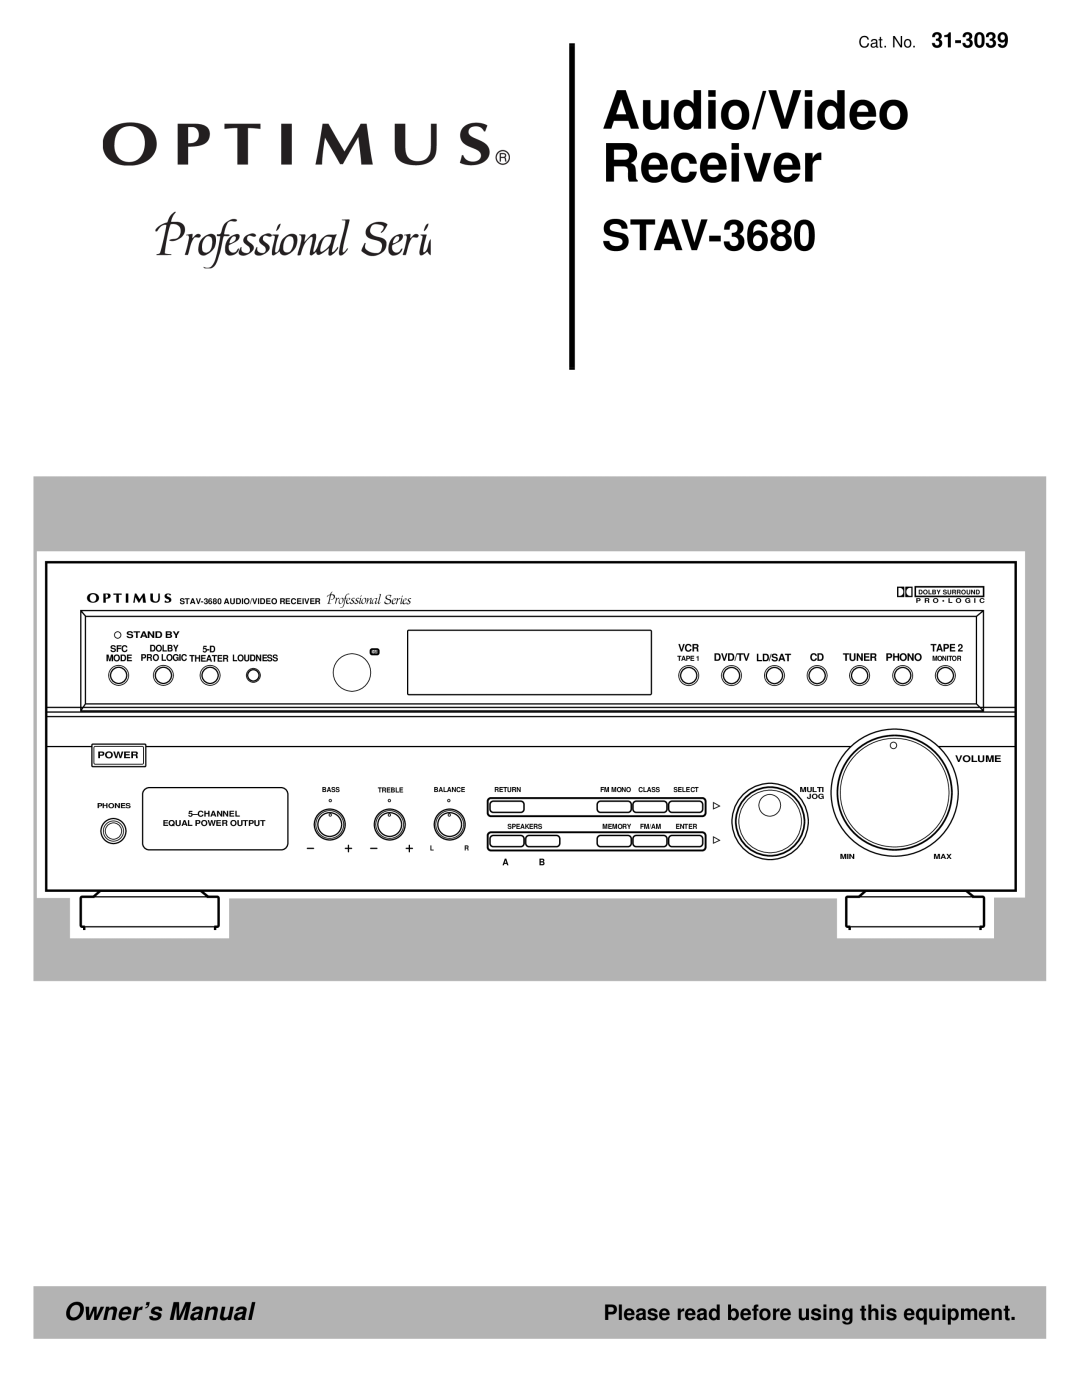 Optimus STAV-3680 owner manual Please read before using this equipment, Audio/Video Receiver, TAPE 1 DVD/TV LD/SAT CD 